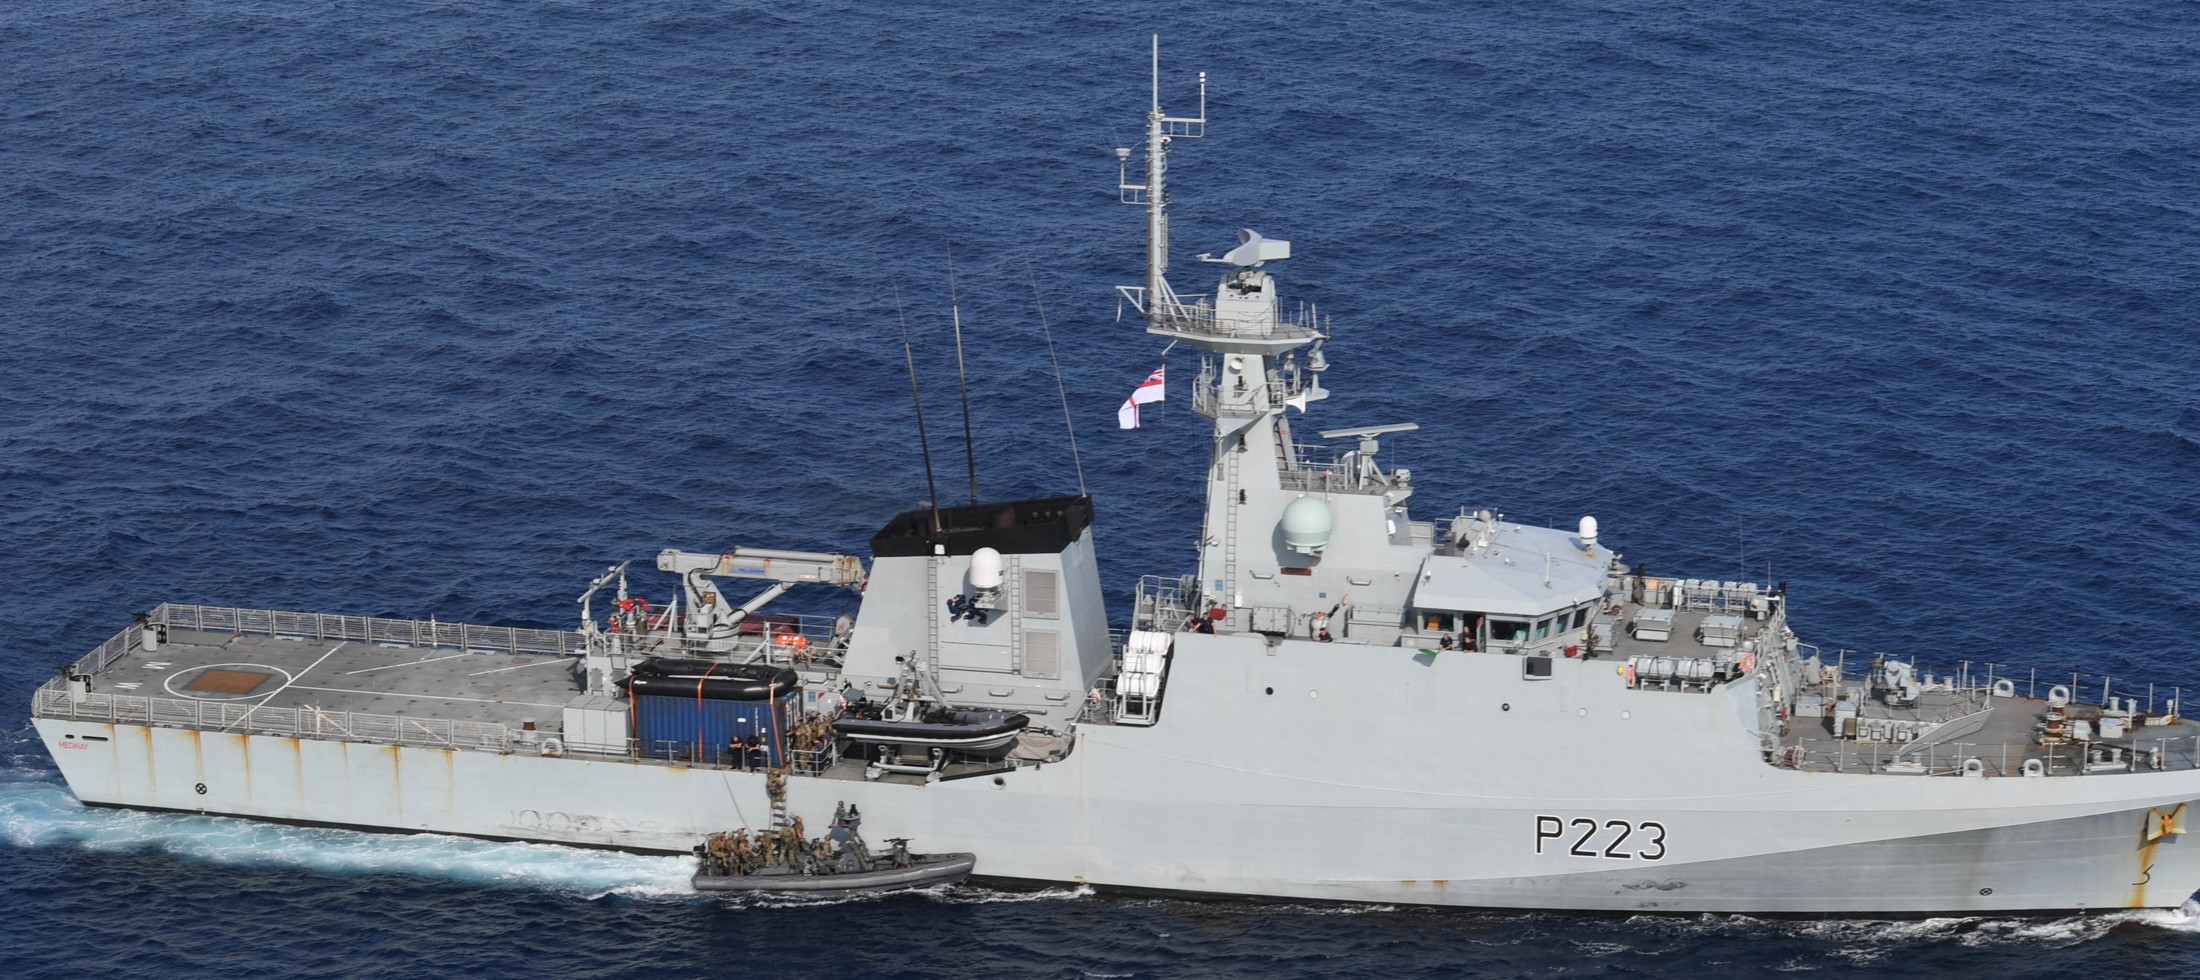 p223 hms medway river class offshore patrol vessel opv royal navy 12